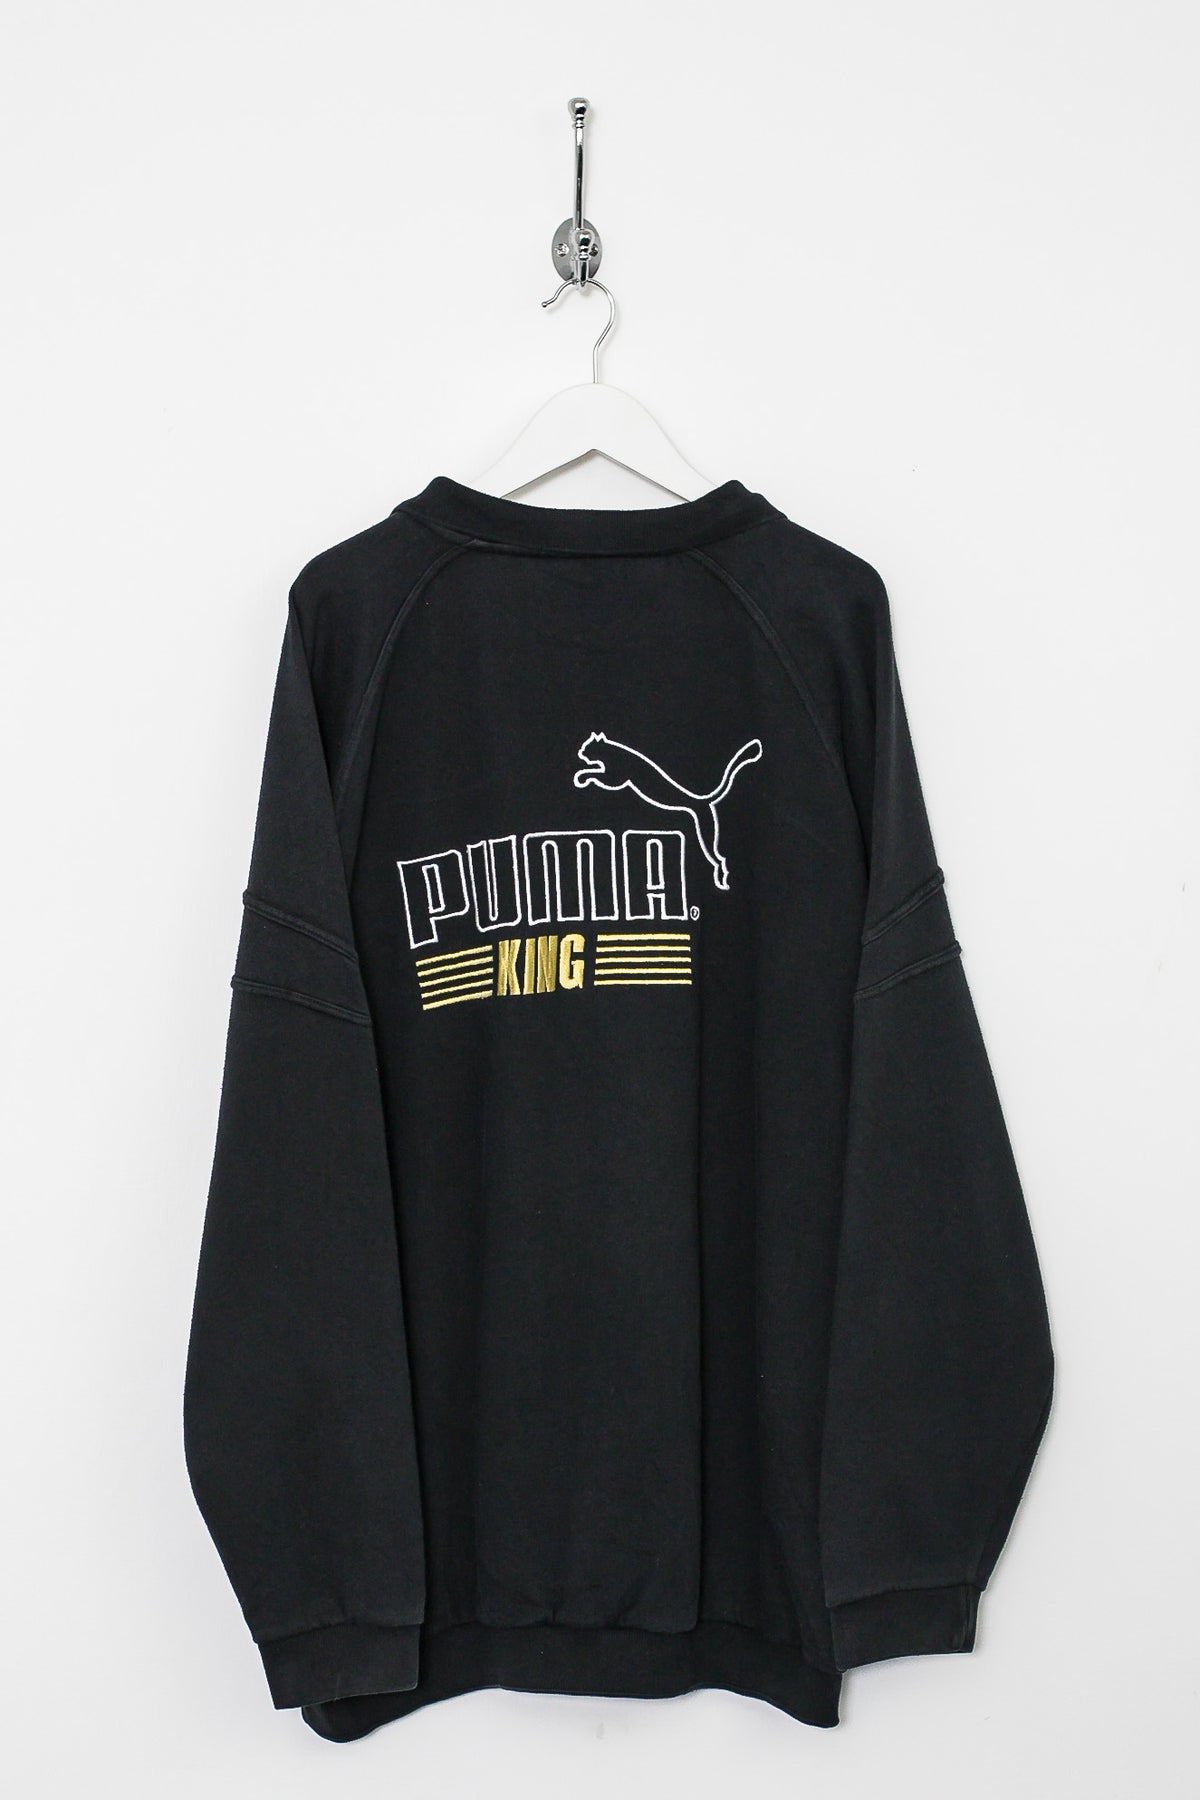 90s Puma King Sweatshirt (XL)